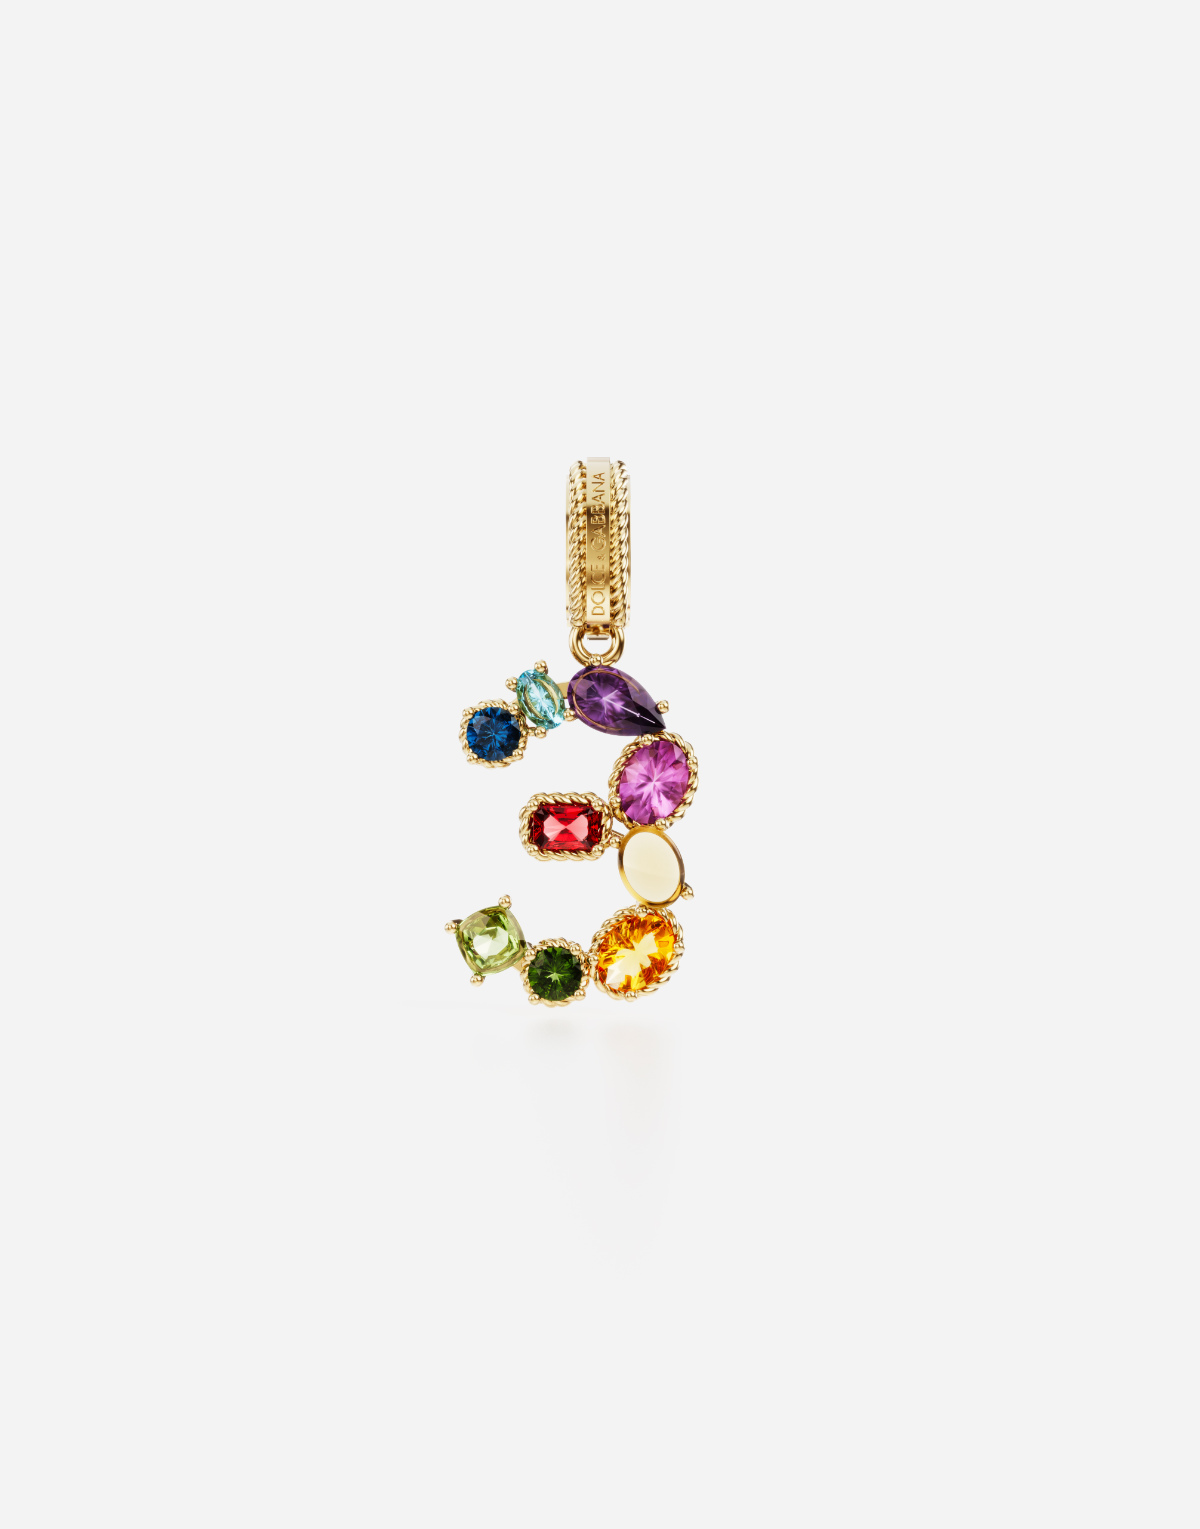 Dolce&Gabbana's Fine Jewellery: Alphabet Collection